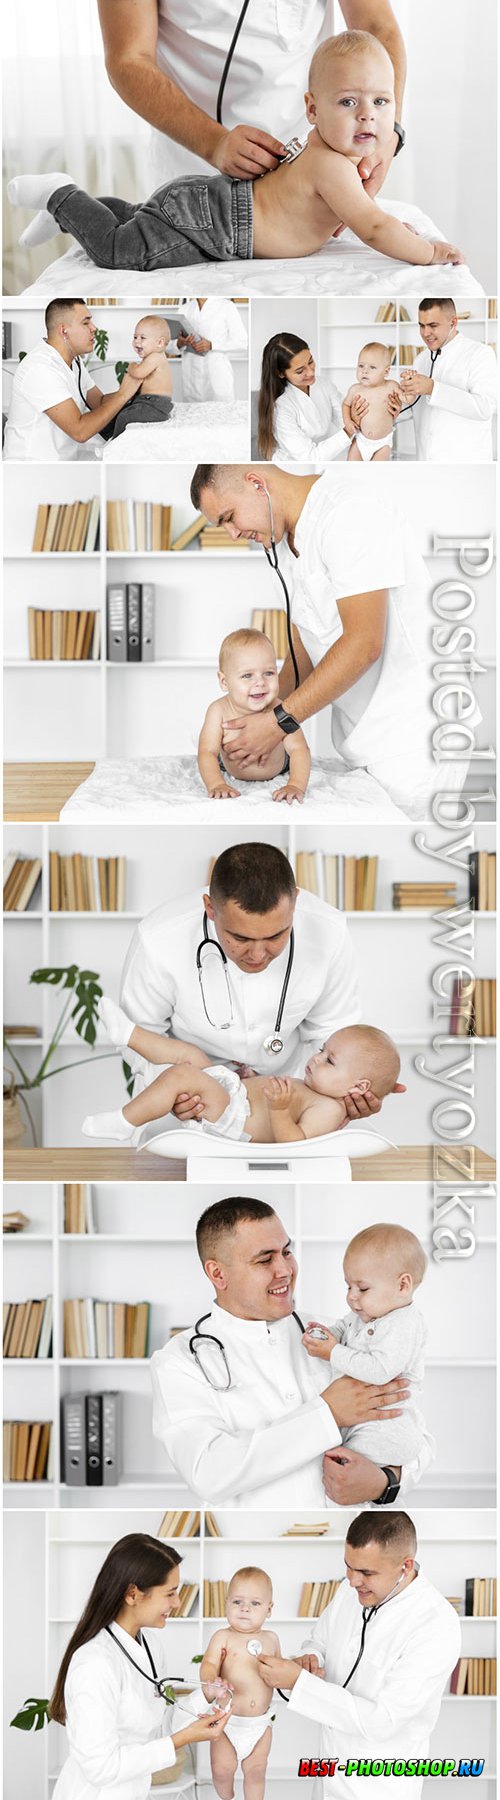 Doctor hands listening little baby stock photo